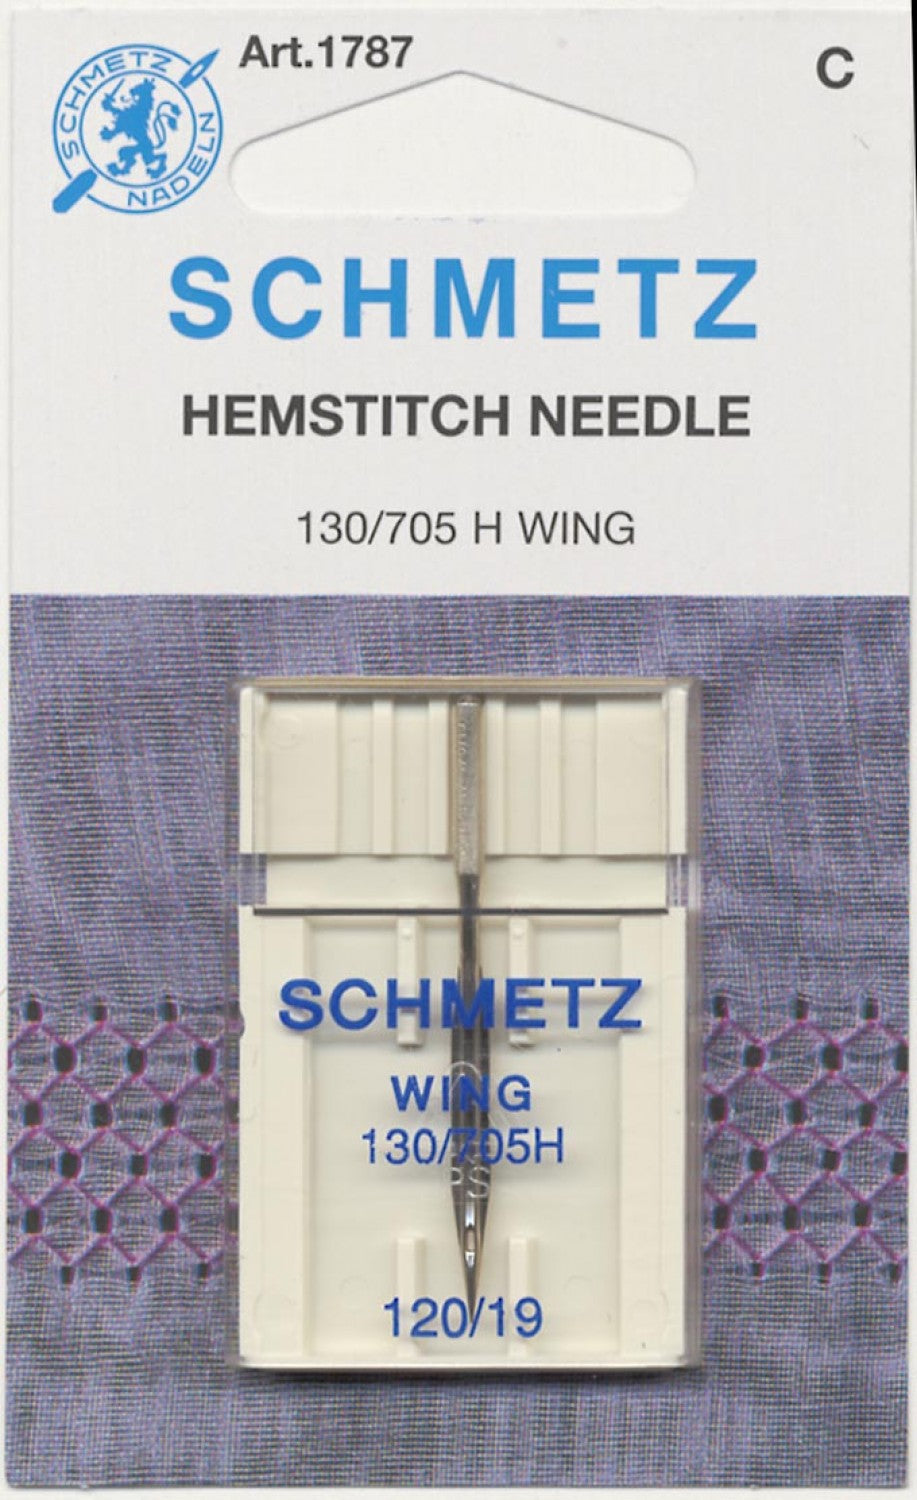 Schmetz Hemstitch 19/120 1 Wing Needle for Decorative Machine Embroidery Stitching